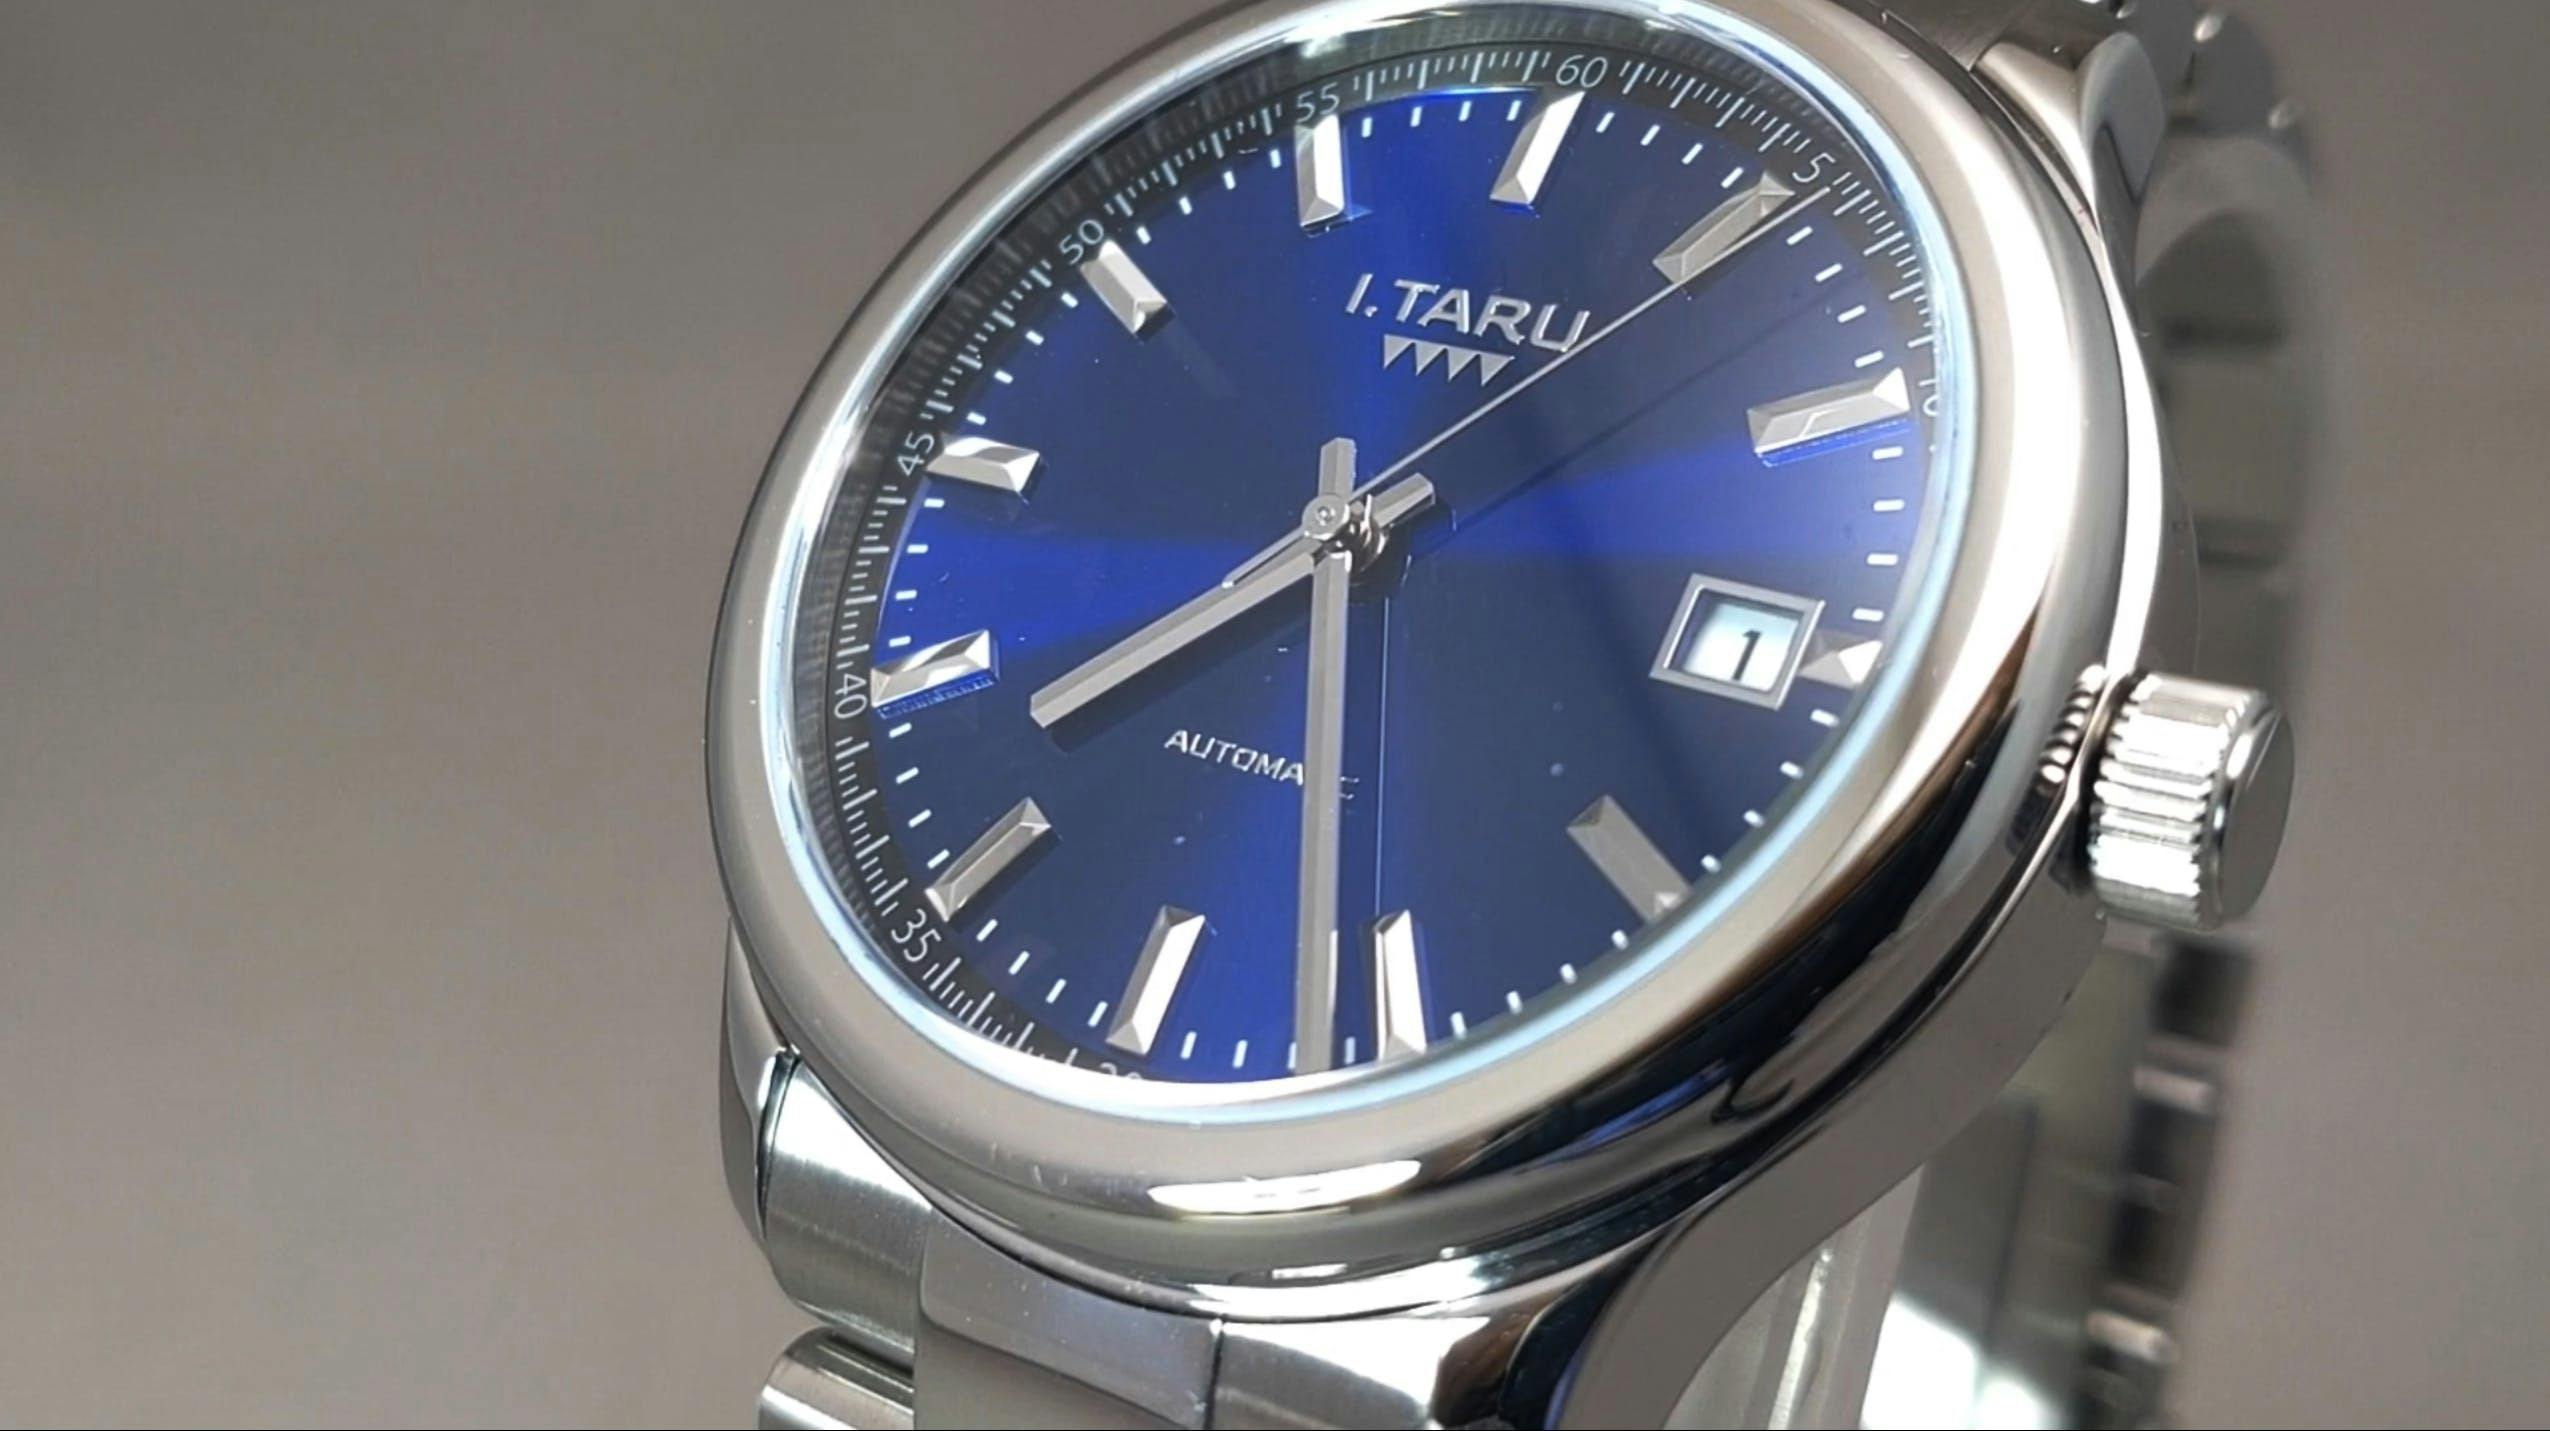 【I.TARU】高級腕時計職人が手掛けた、シーンを選ばないヘリテージ腕時計